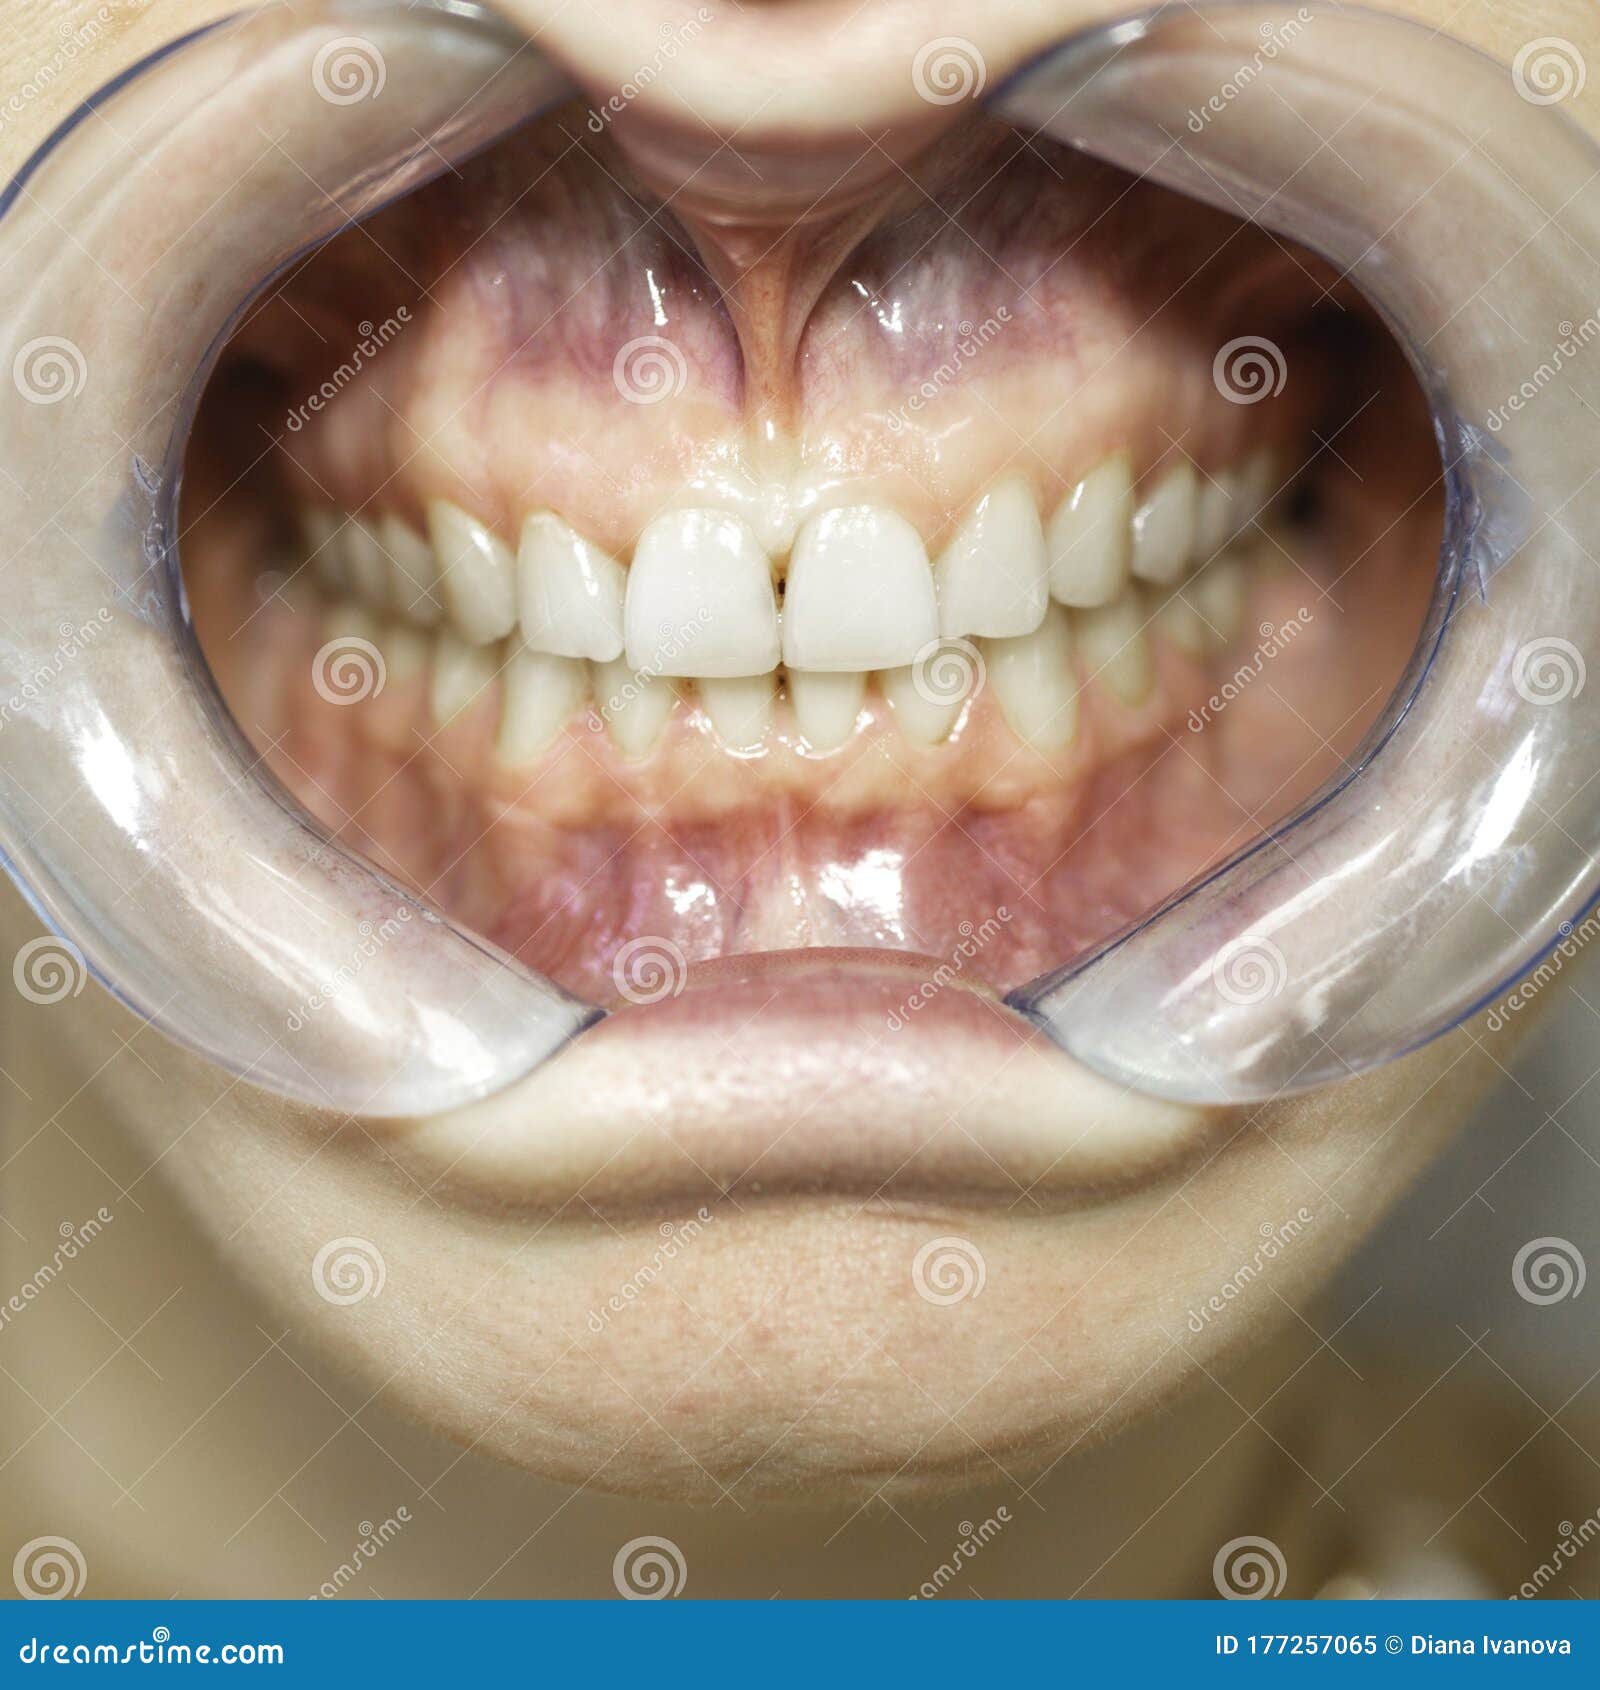 Dental Mouth Spreader Before Teeth Whitening